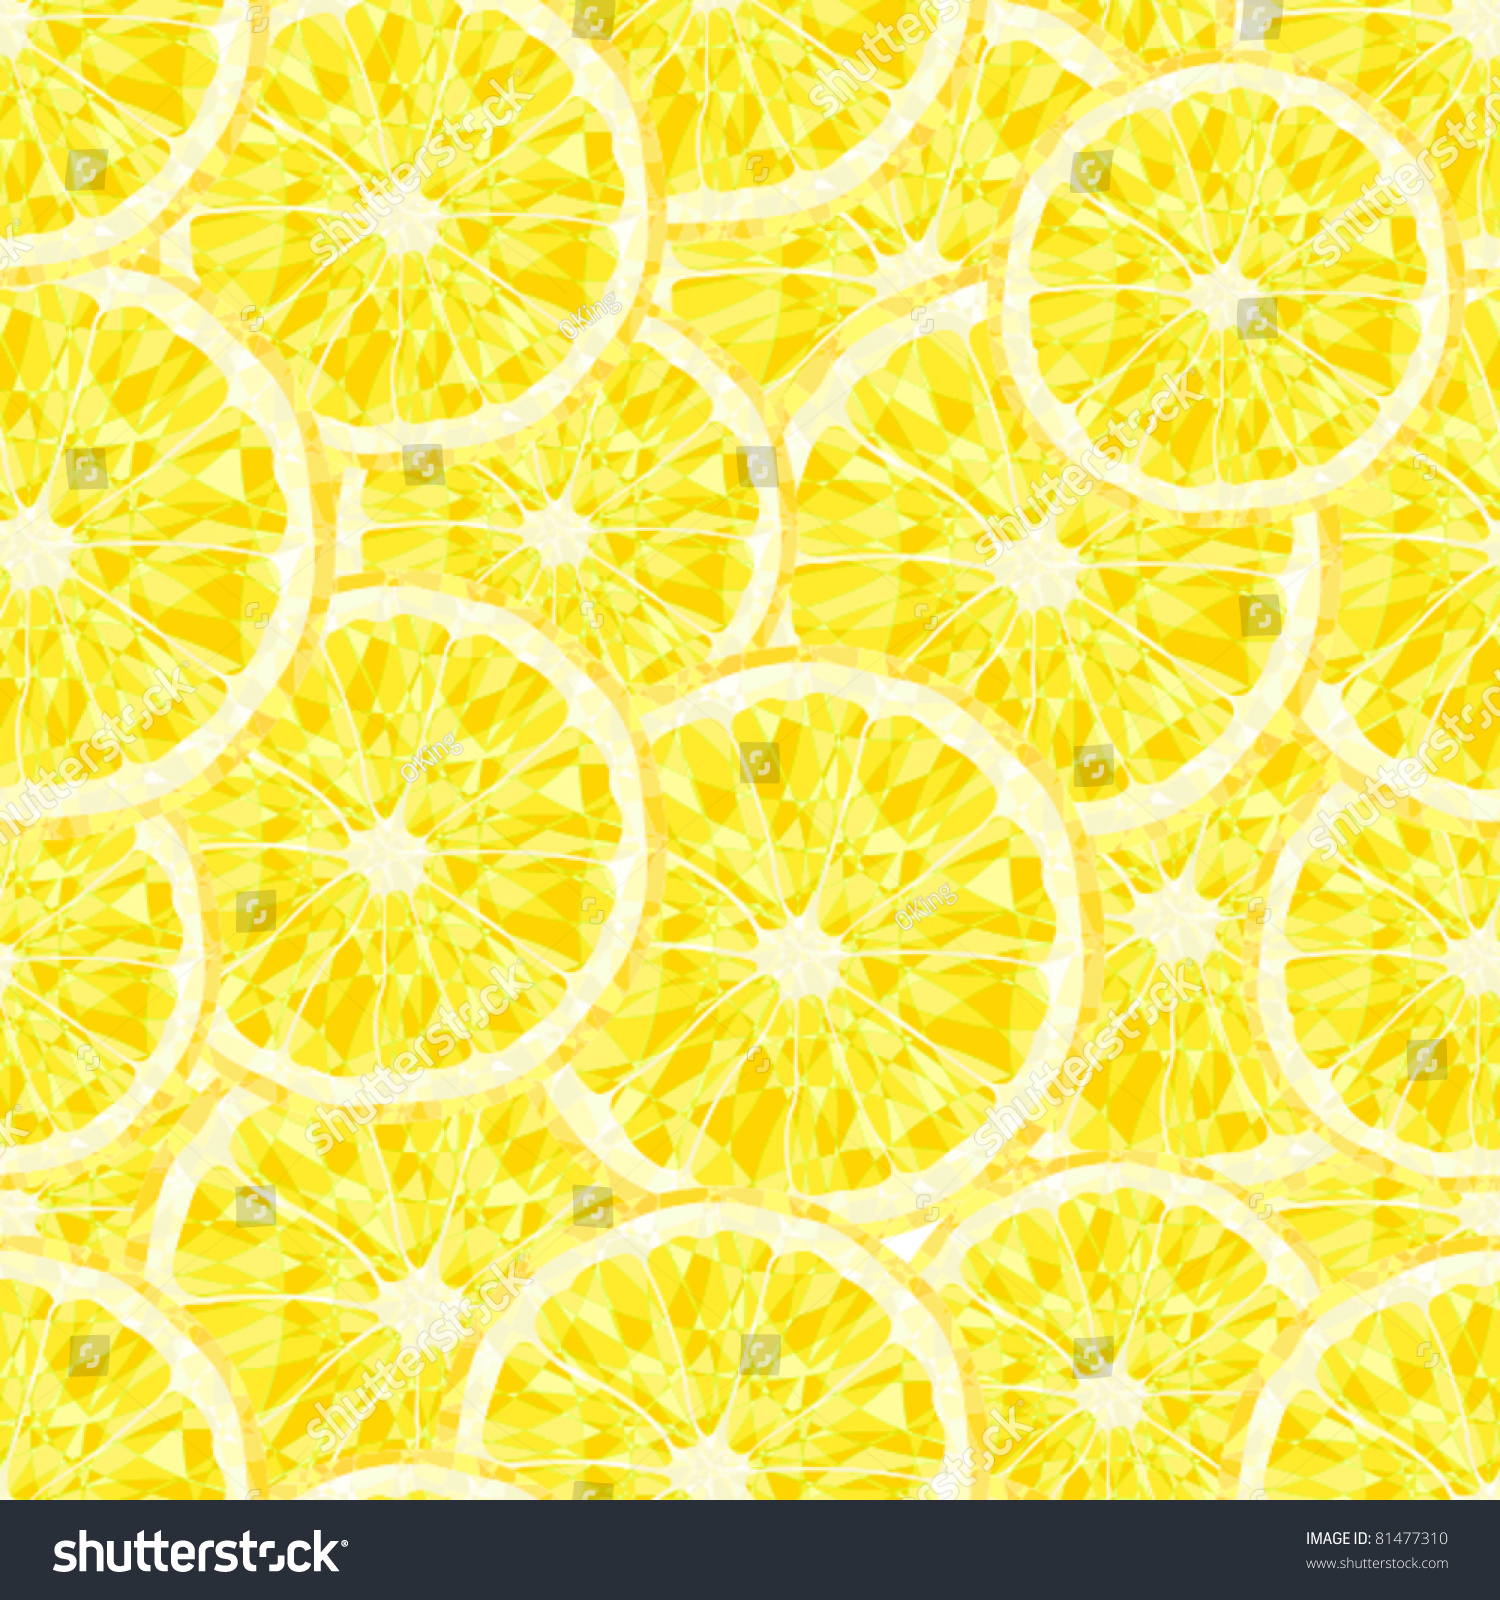 Yellow Lemons A Seamless Background Stock Vector Illustration 81477310 ...